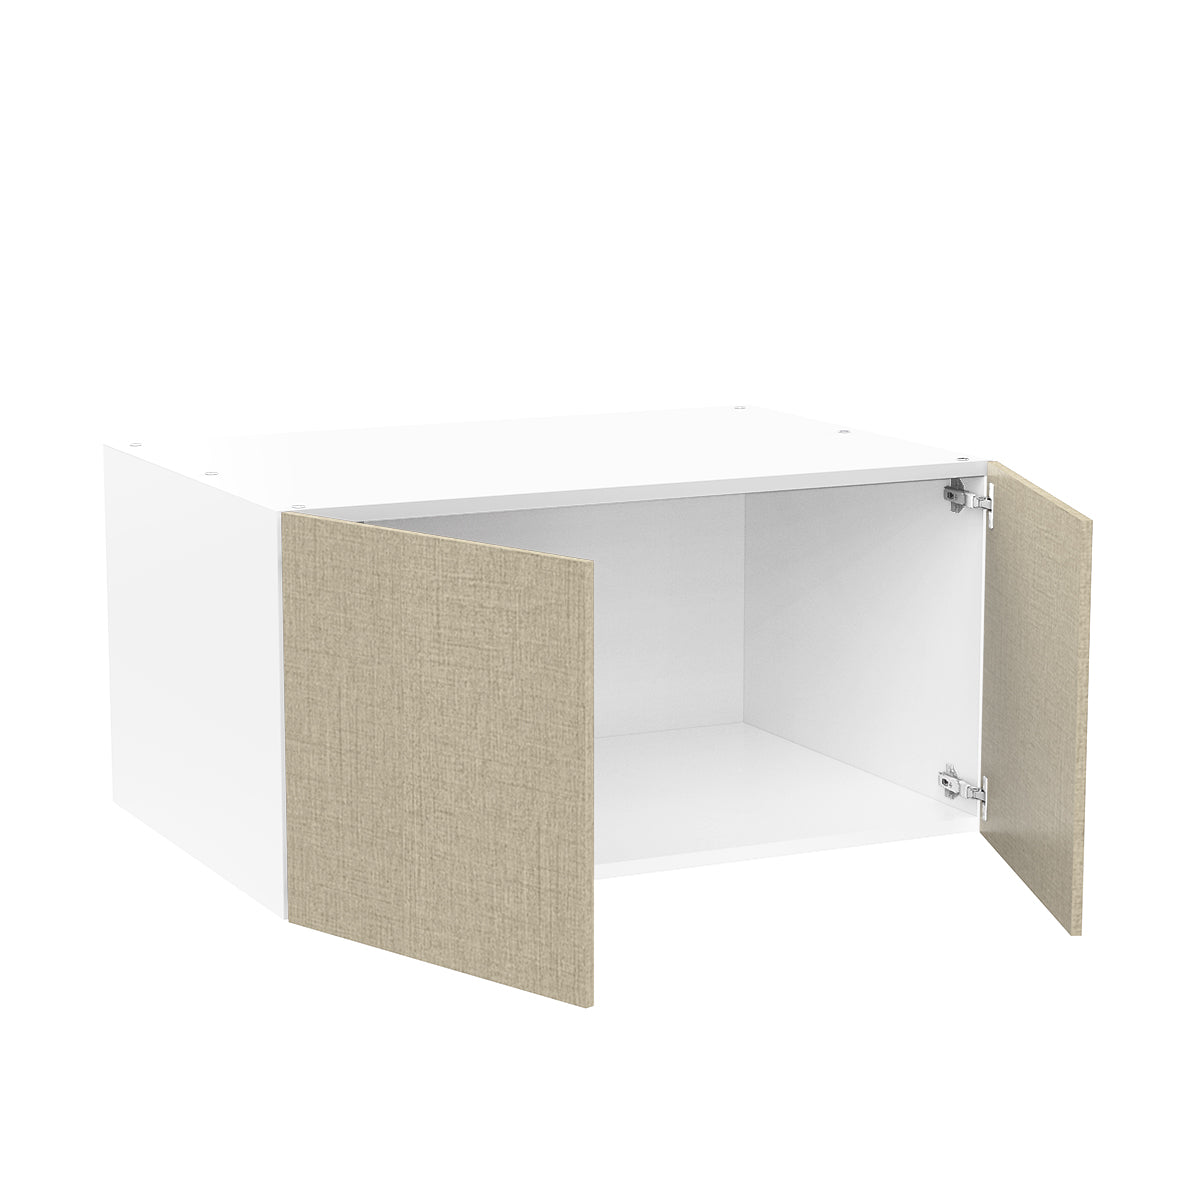 RTA - Fabric Grey - Double Door Refrigerator Wall Cabinets | 36"W x 18"H x 24"D